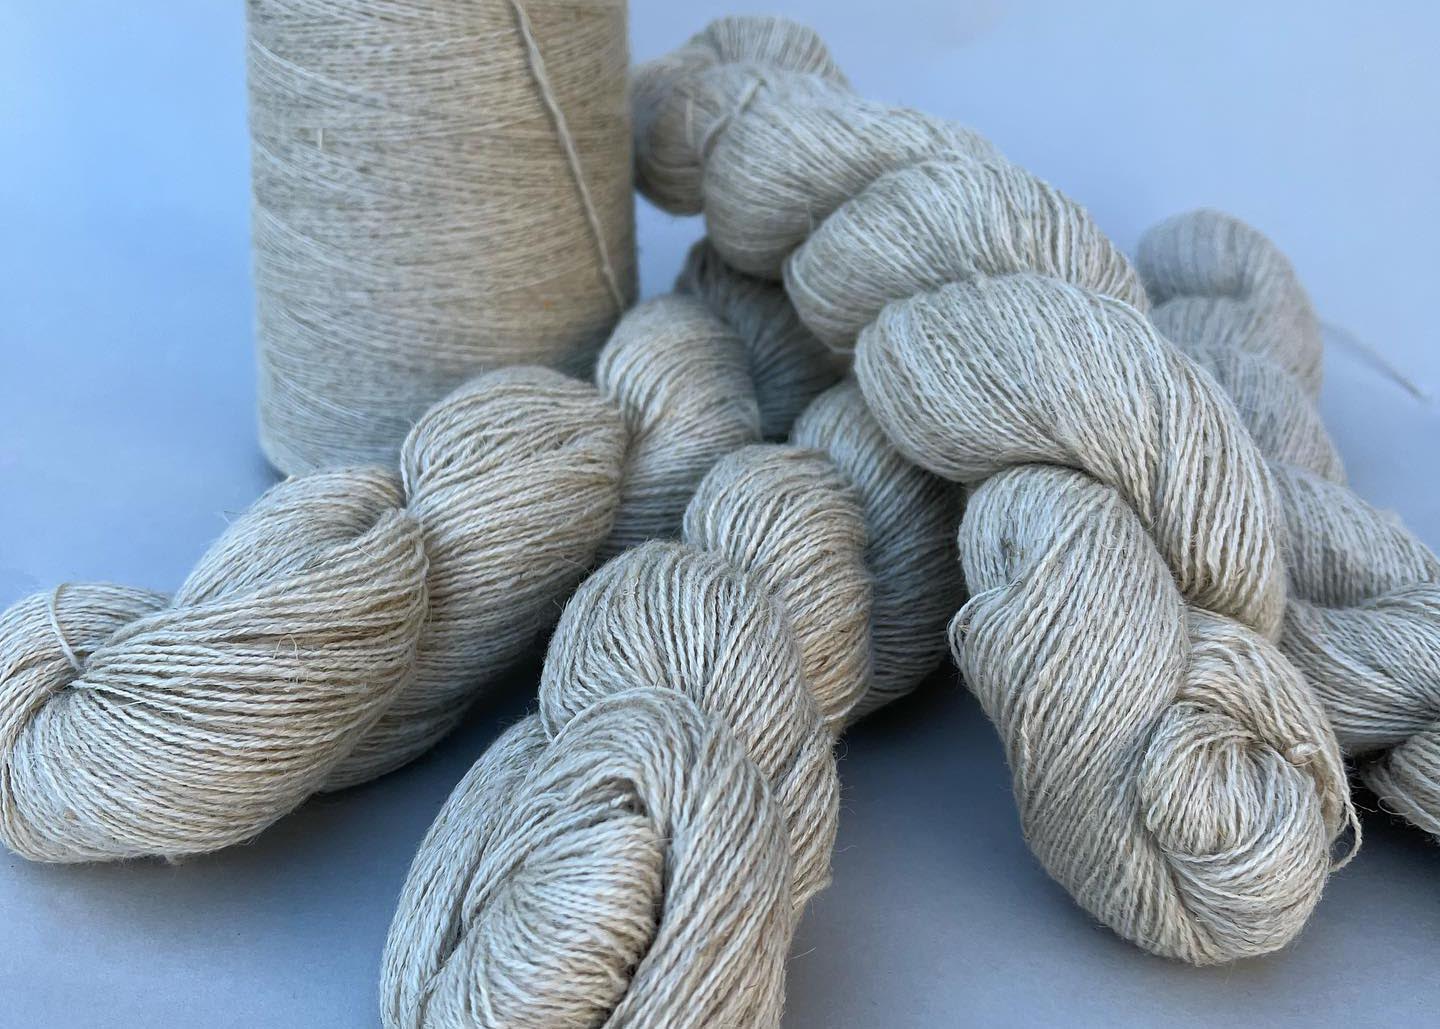 Linen yarn.